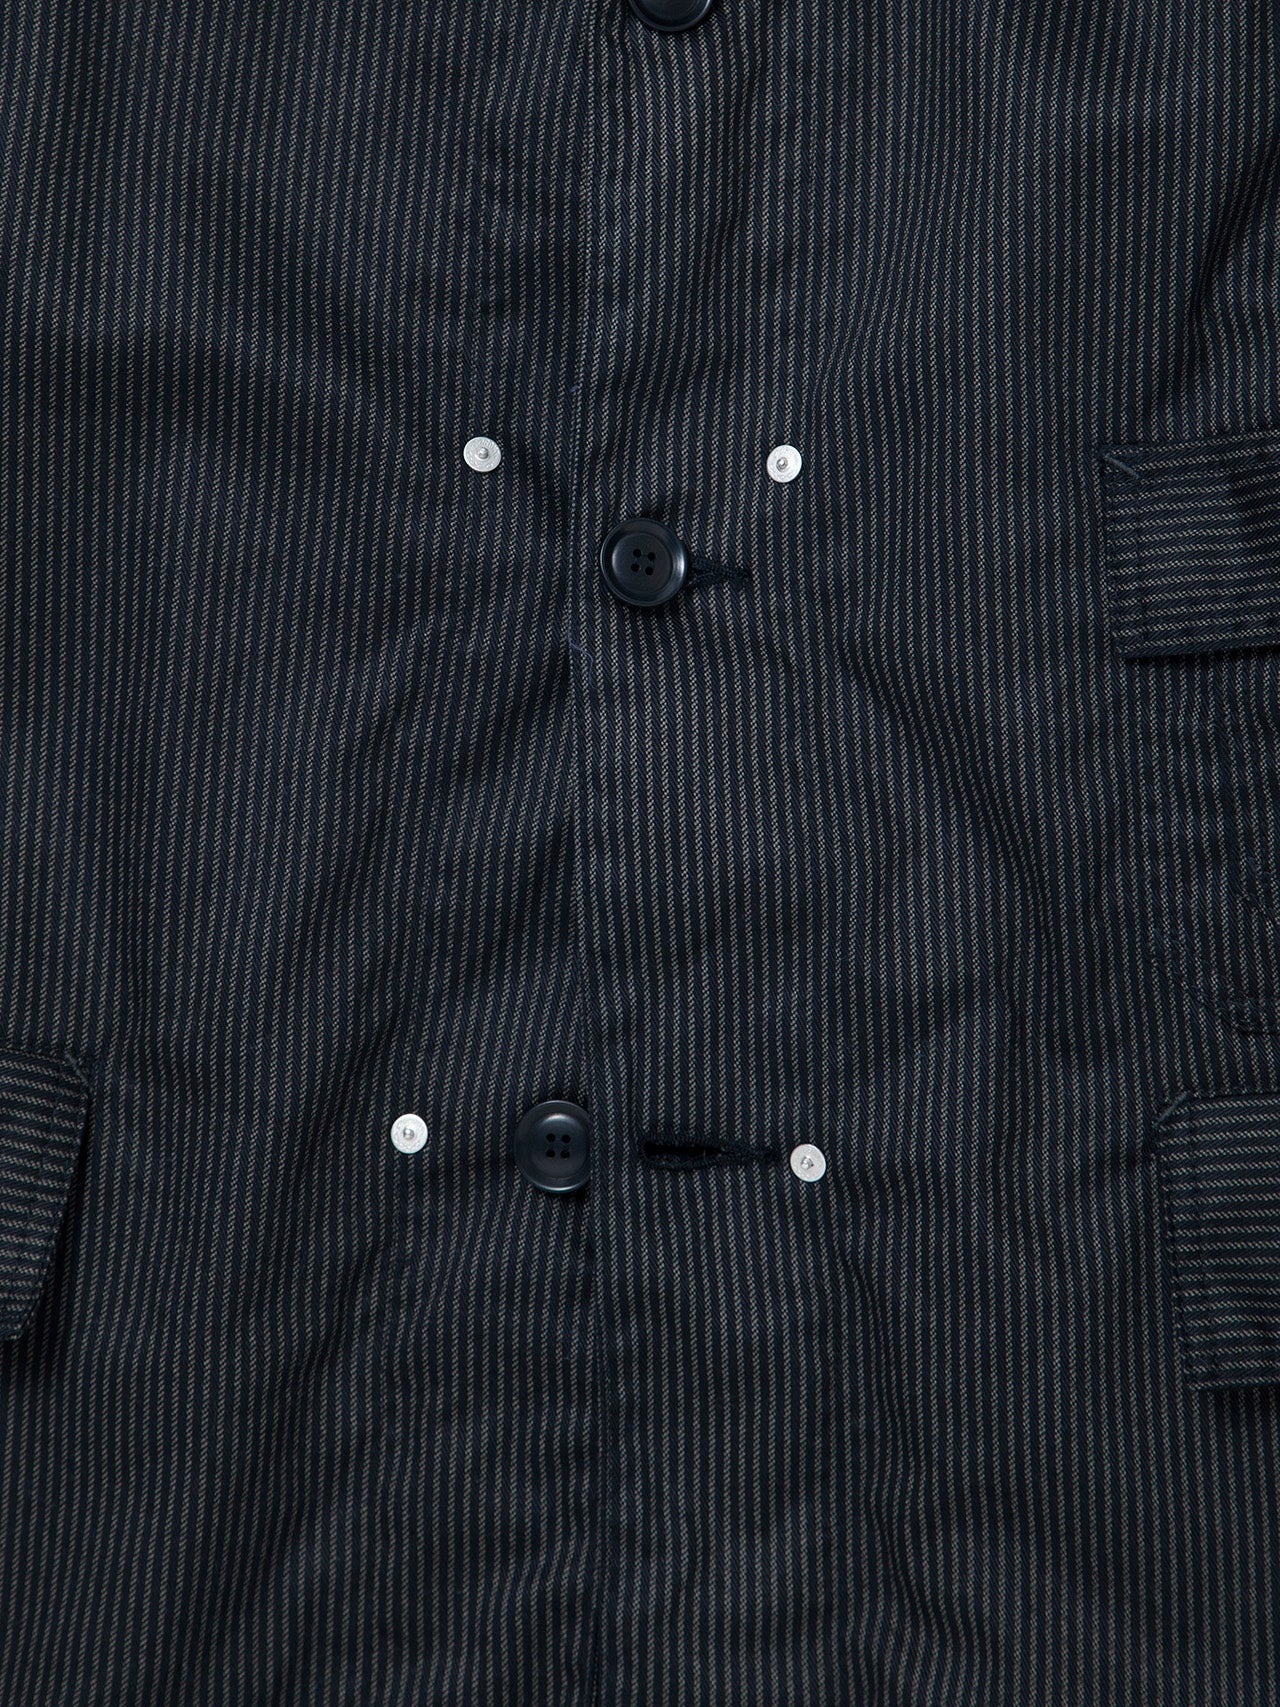 CJ001 - CORONA・Utility Game Jacket / Black Key Stripe - Grey Stripe on Black